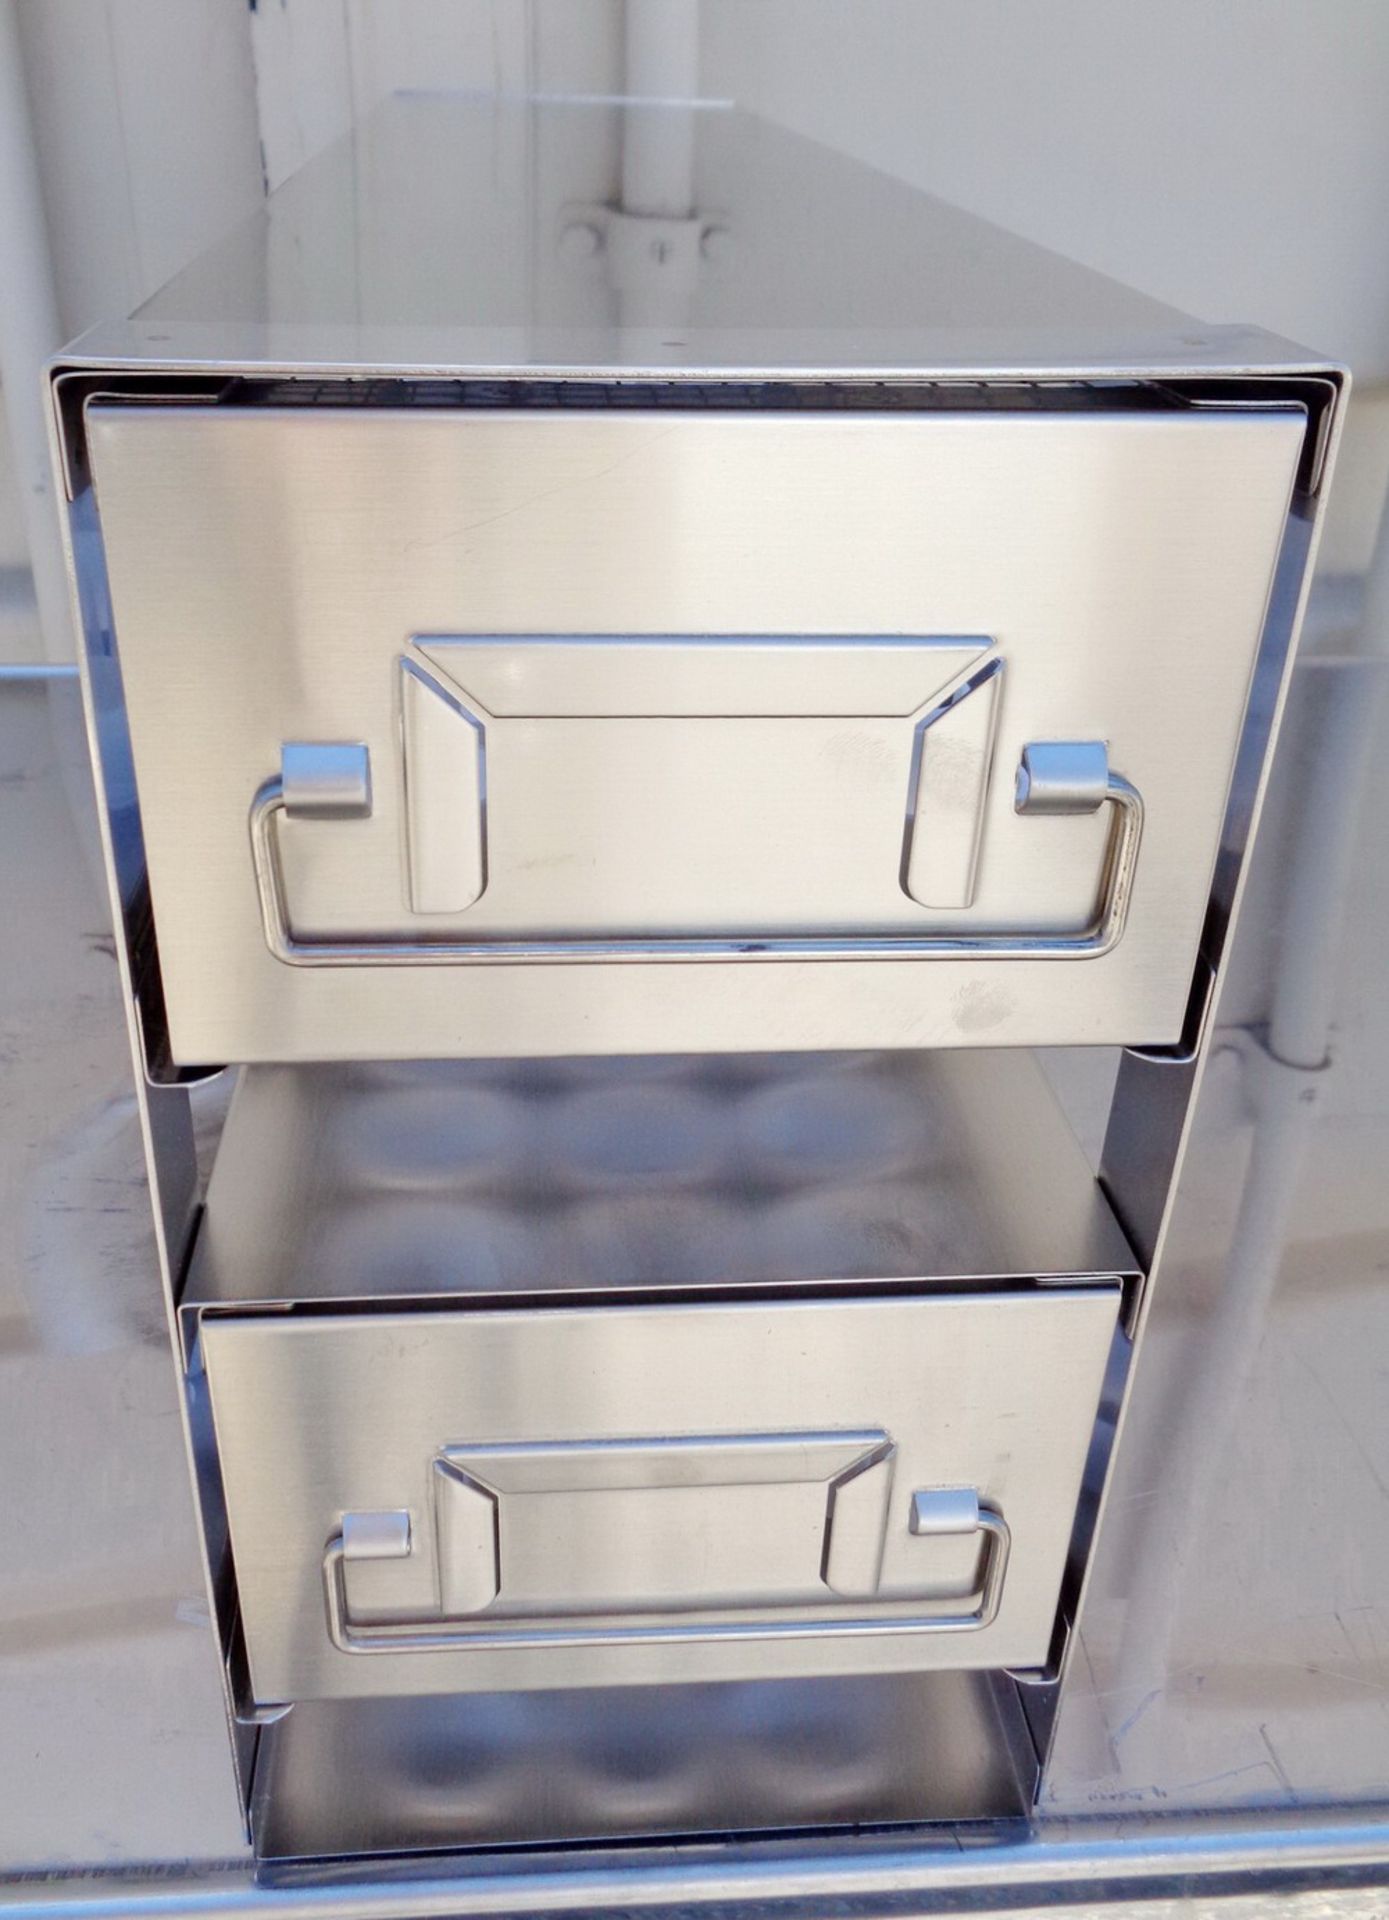 VWR Upright Freezer Drawer Rack for 50ml tubes